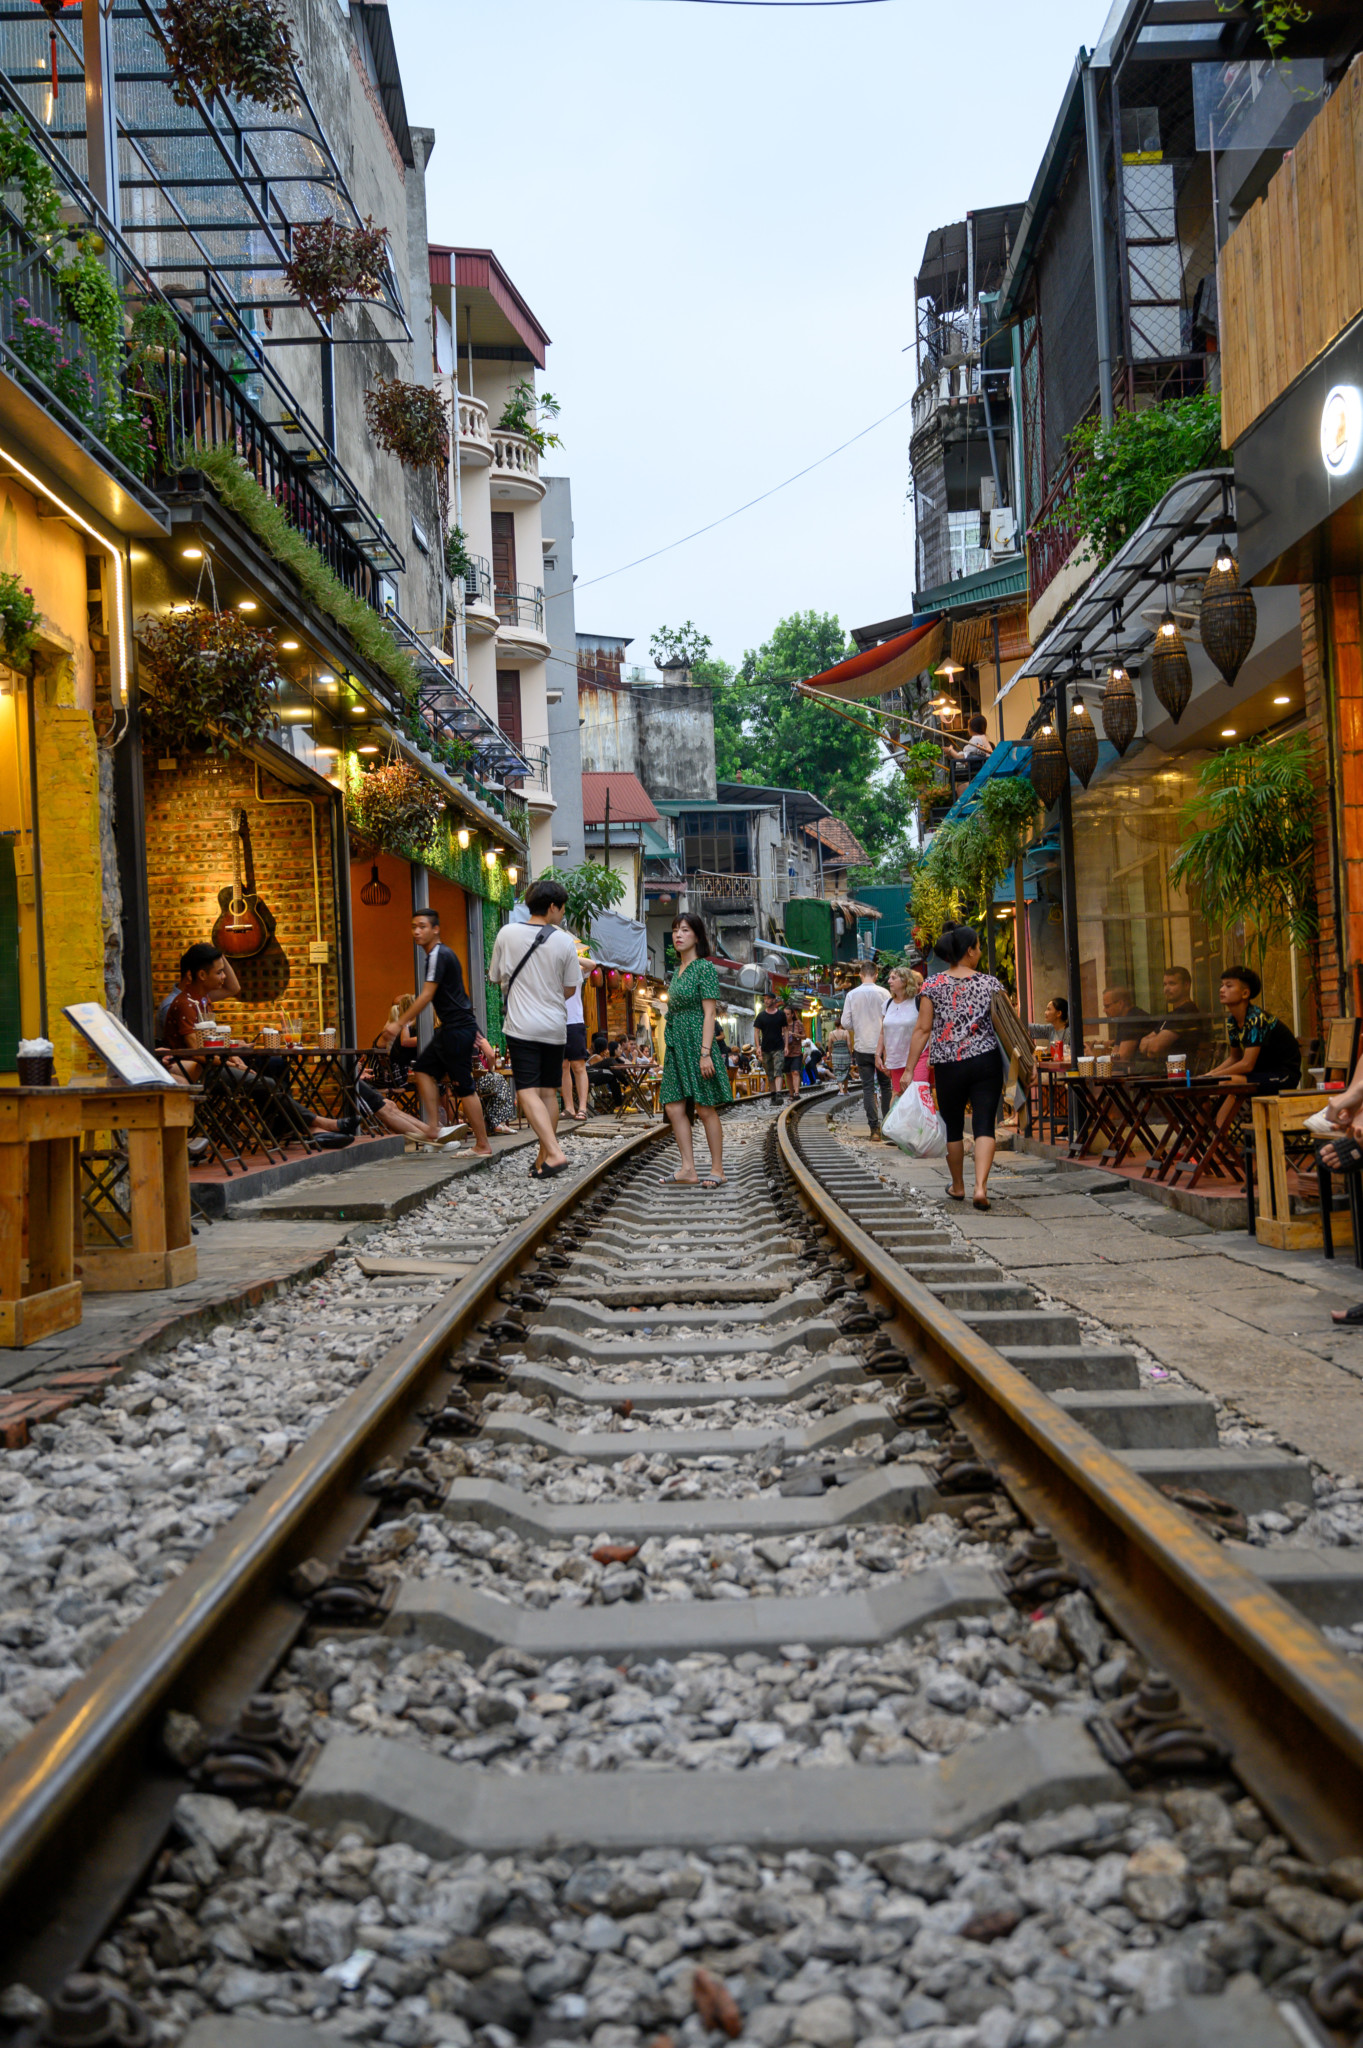 Train Street in Hanoi in Vietnam